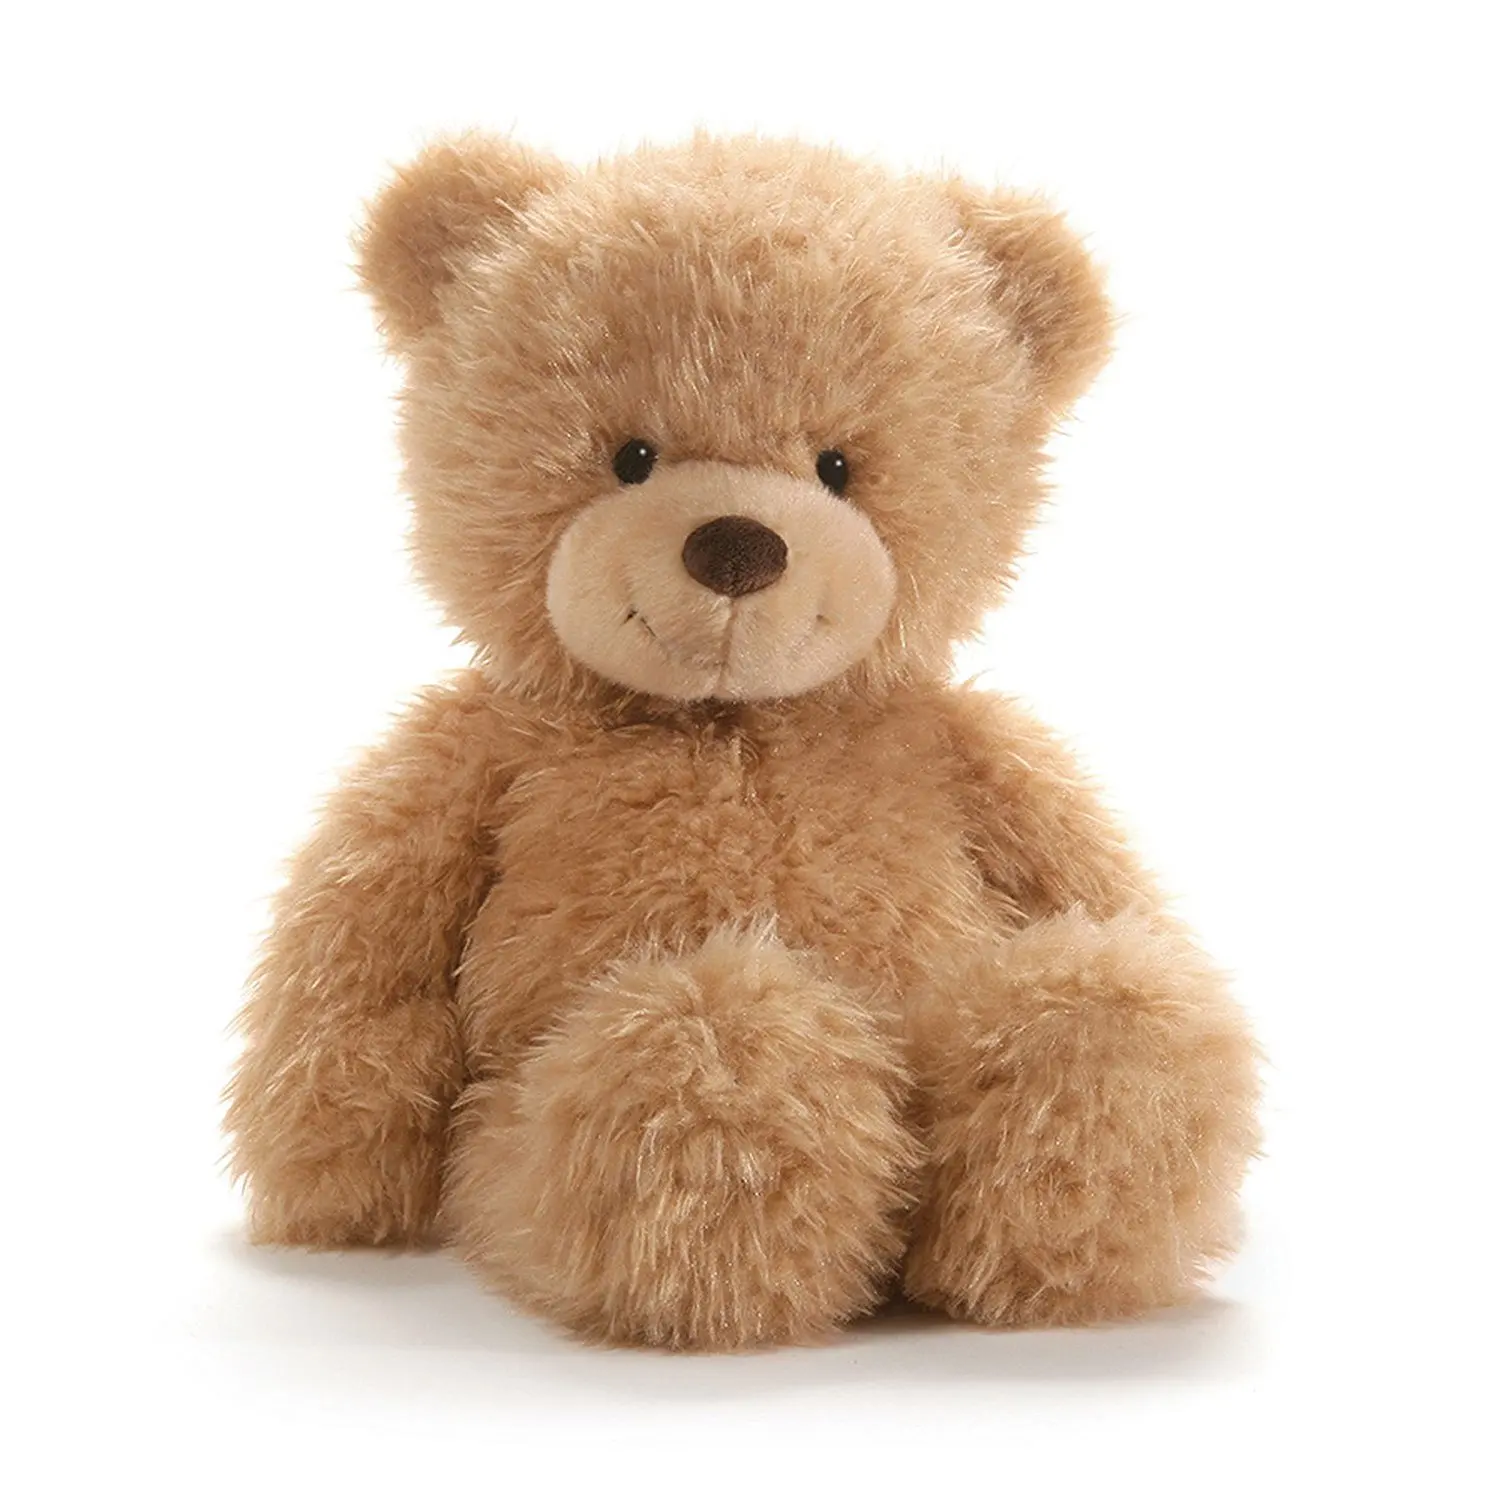 24.99. GUND Ginger Teddy Bear Stuffed Animal Plush, Beige, 15. 